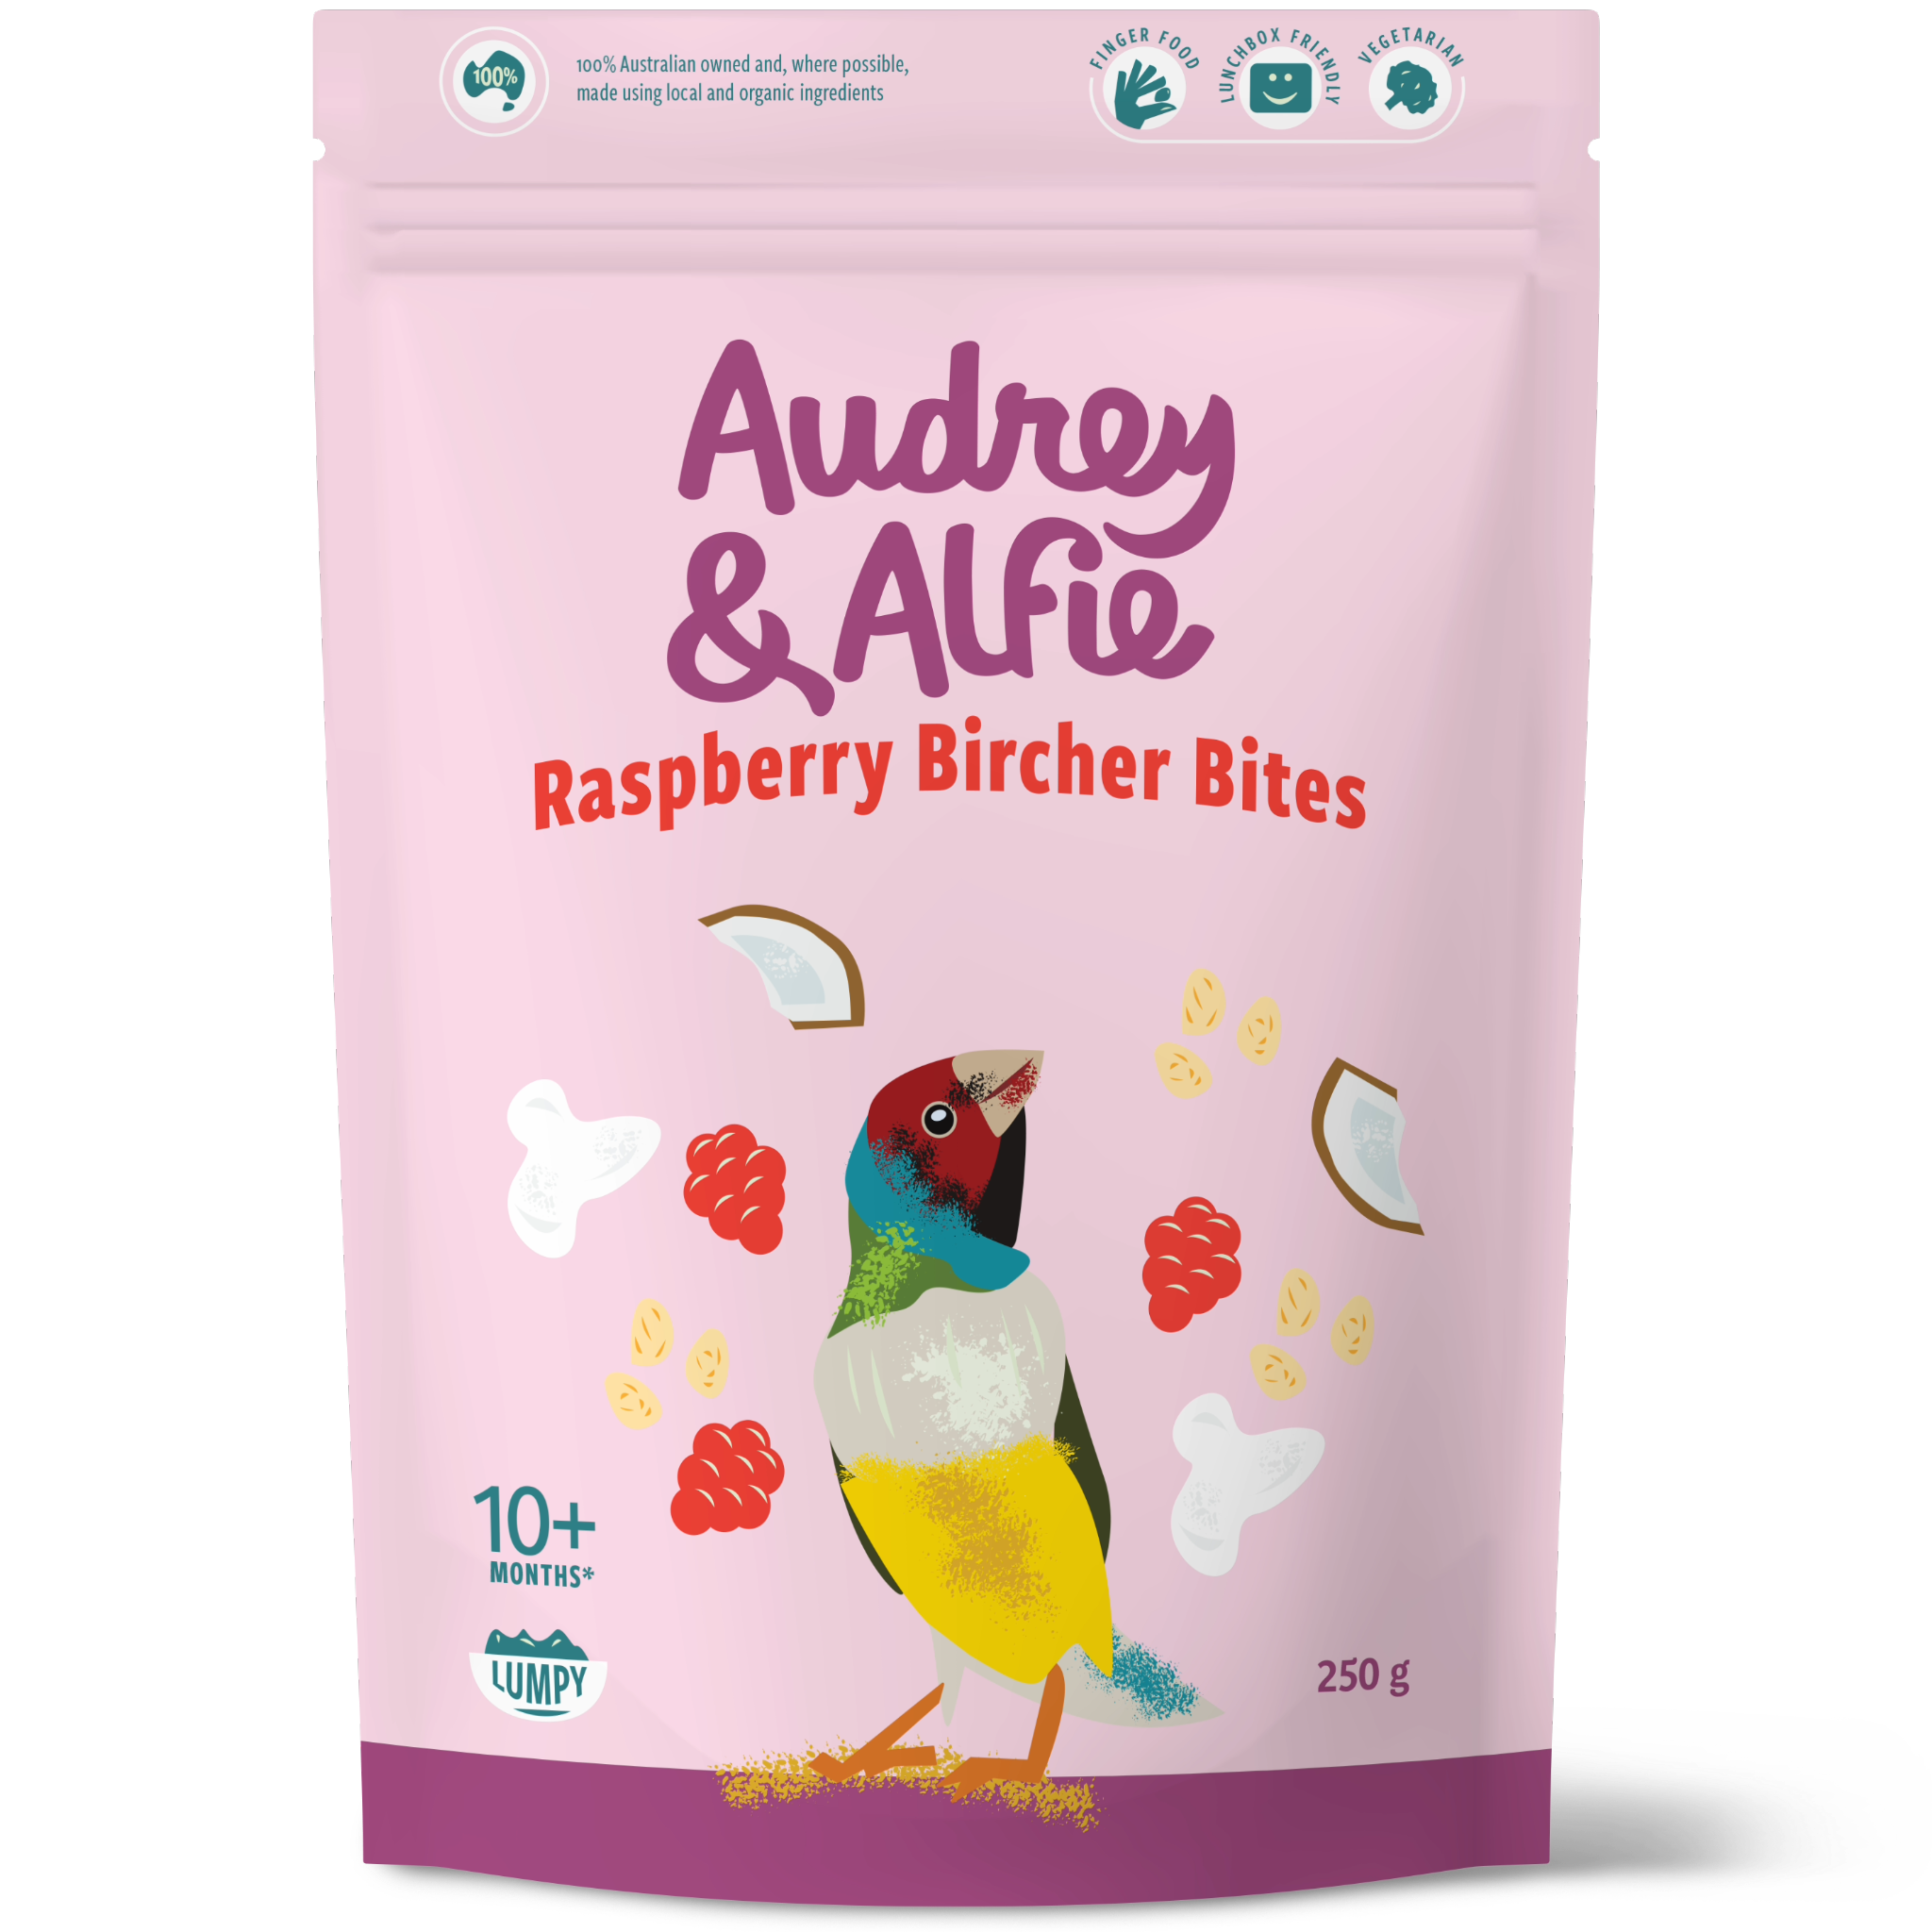 A Packet of Raspberry Bircher Bites from Audrey & Alfie's Finger Food Range